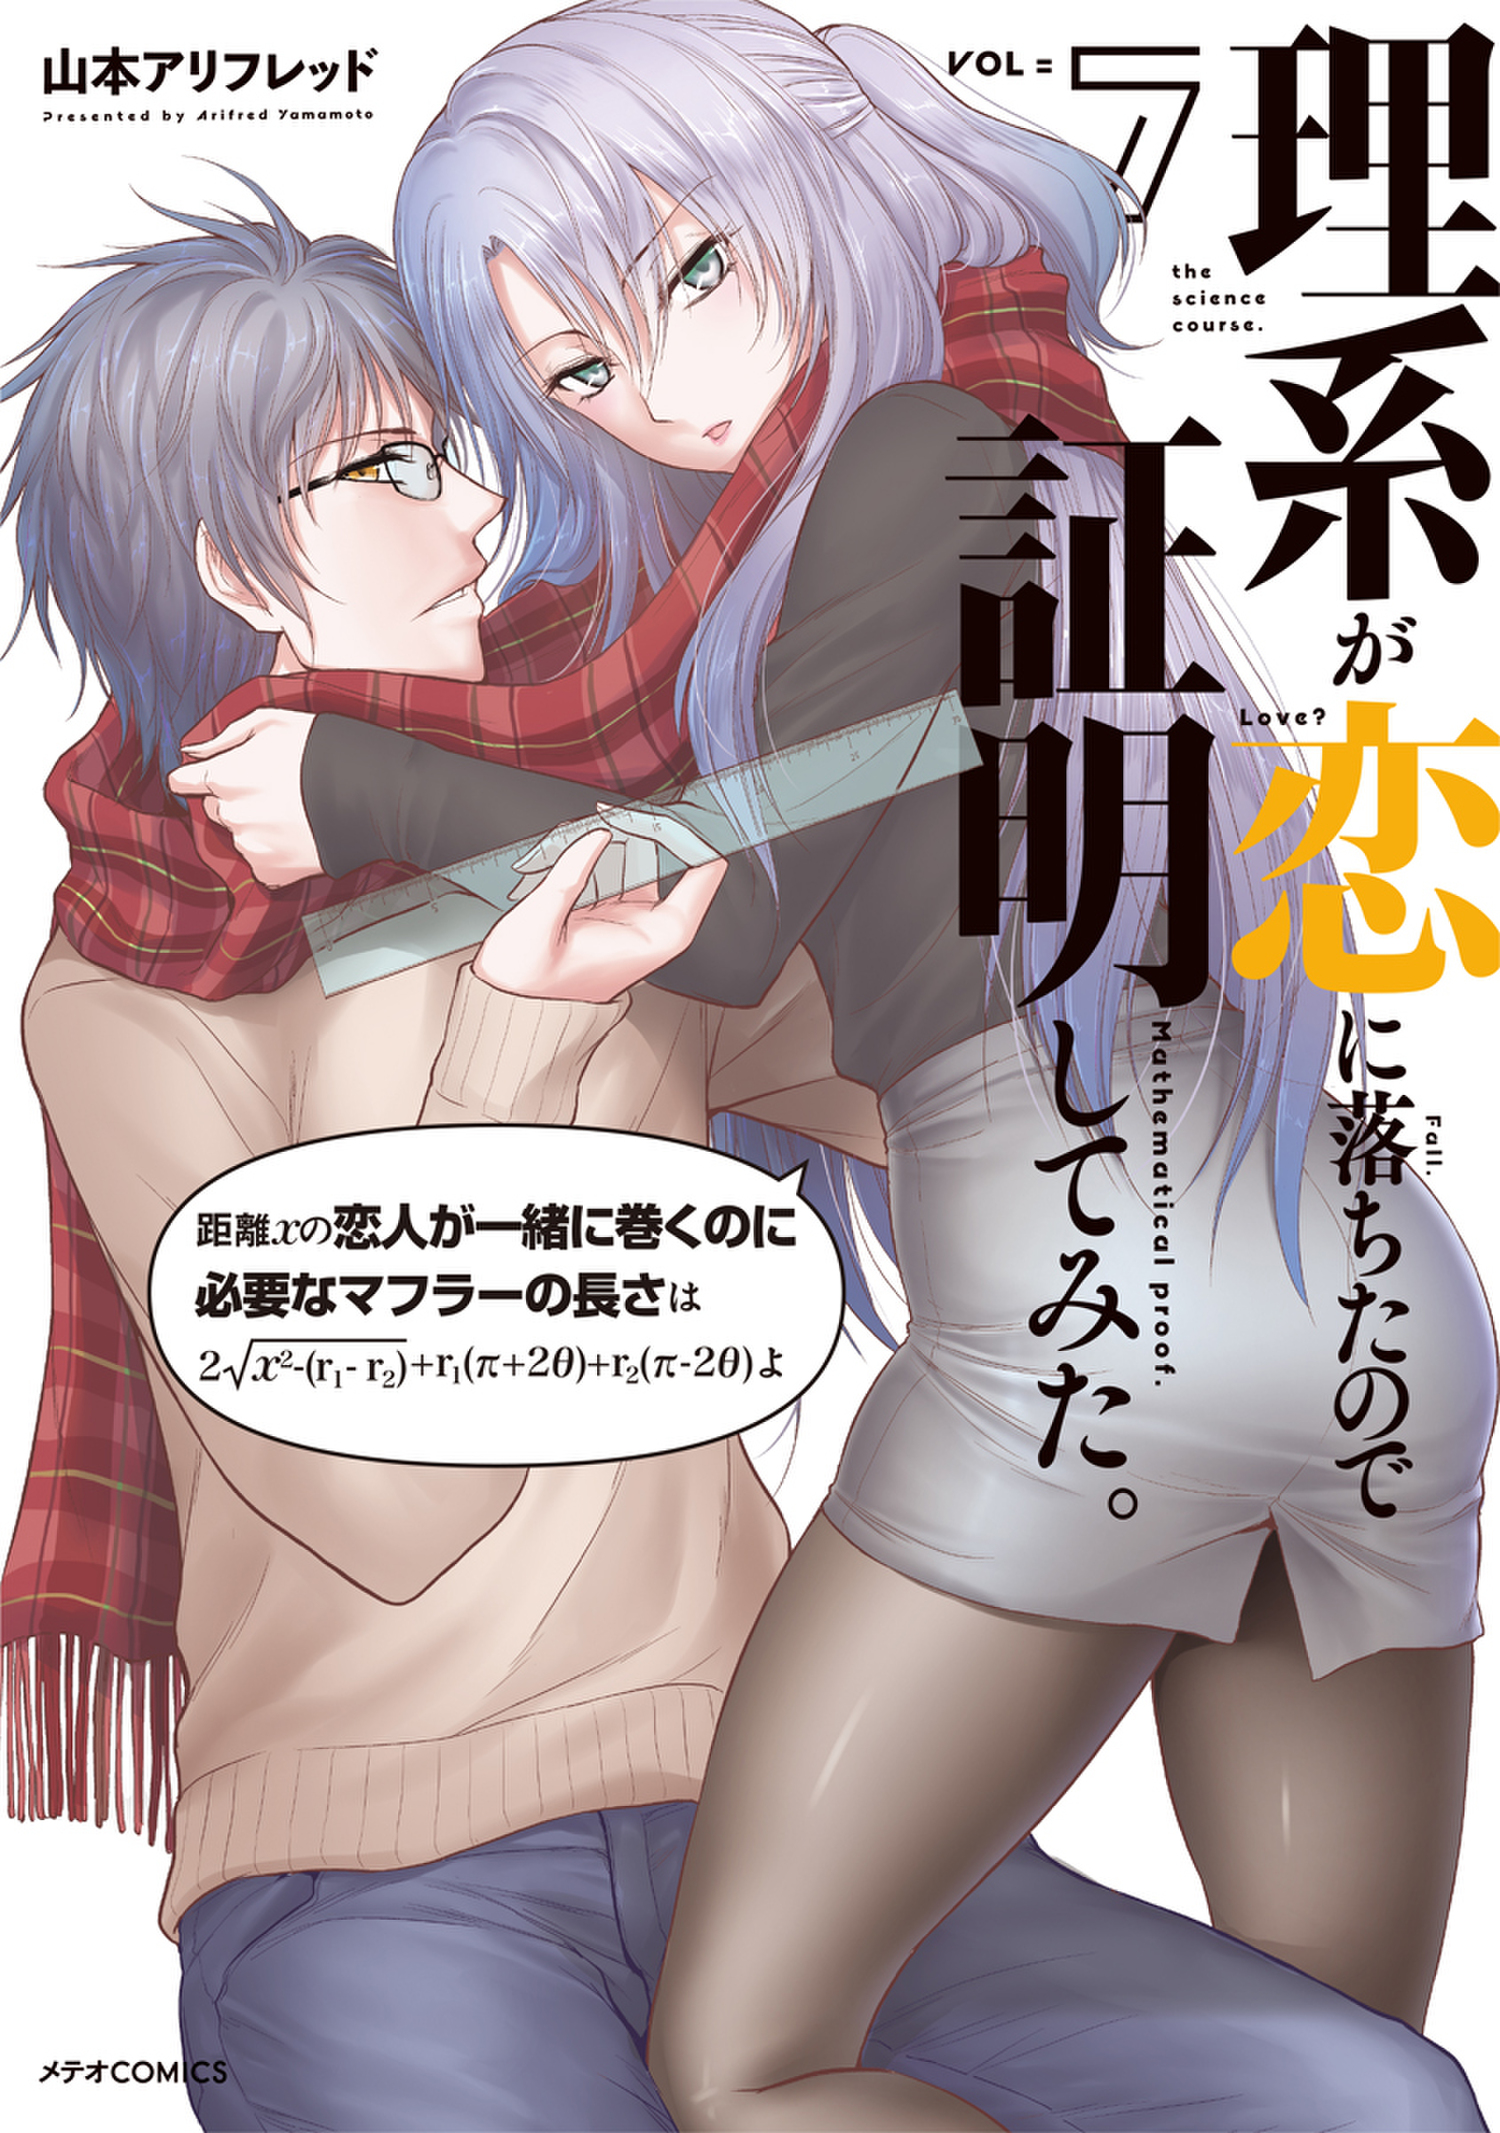 Manga Mogura RE on X: Rikei ga Koi ni Ochita no de Shoumei shitemita  (Science Has Fallen in Love, so We Tried to Prove It) vol 11 by Yamamoto  Alfred  /